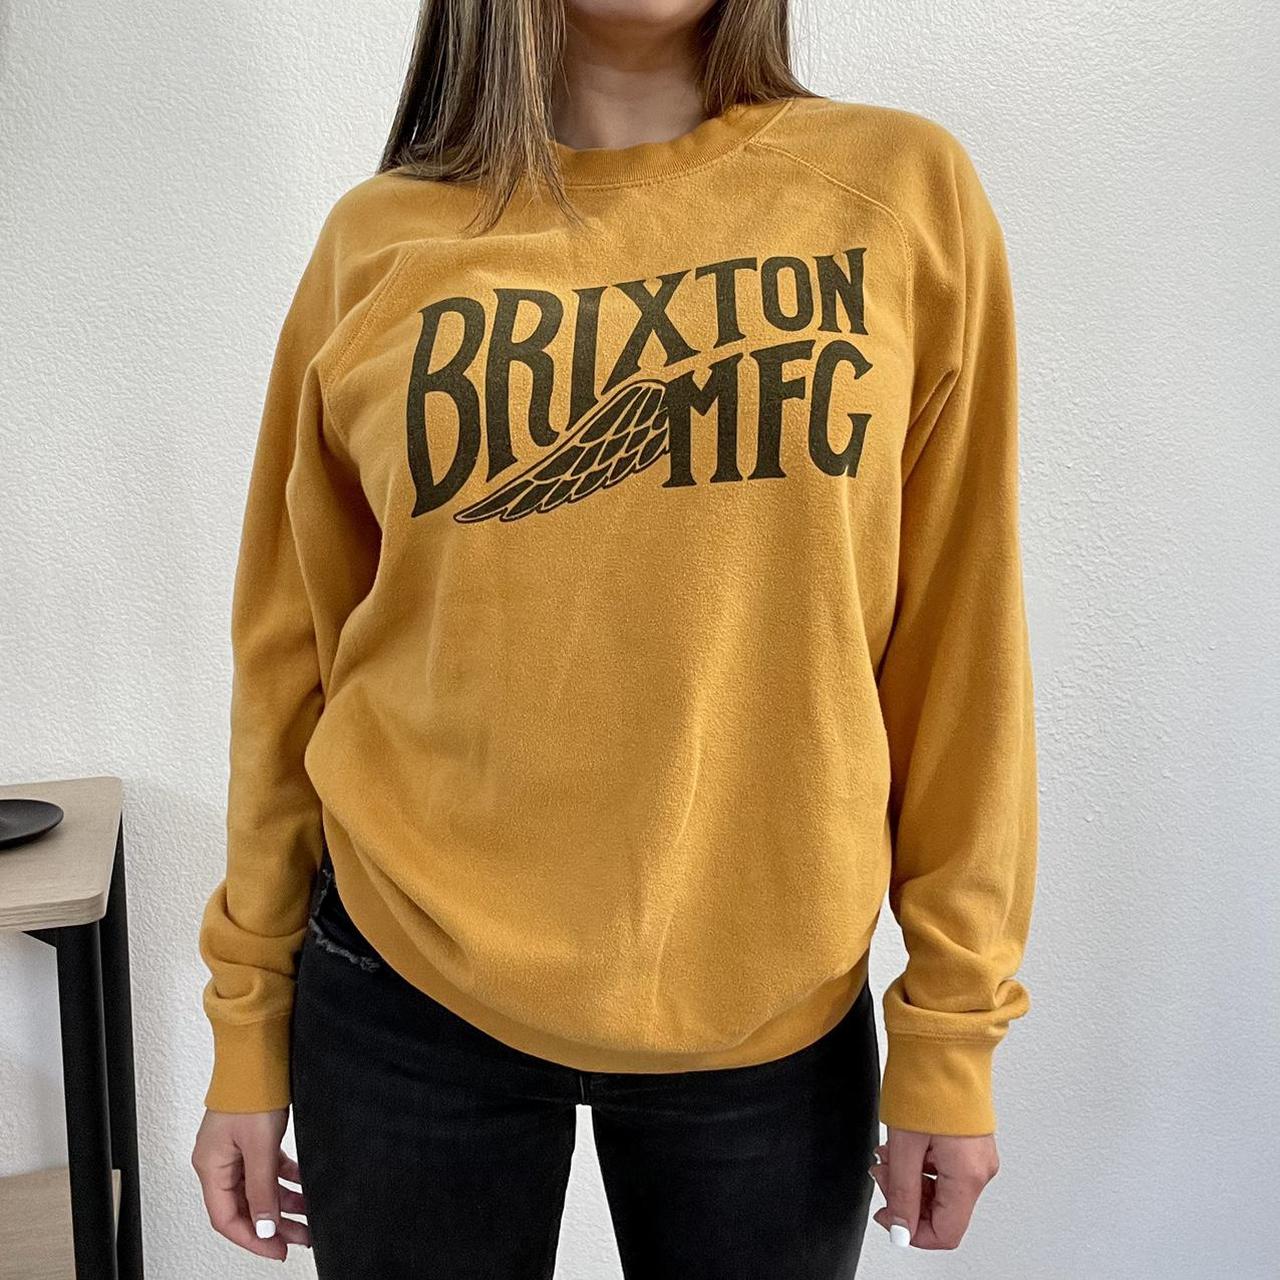 Brixton Women's Yellow Sweatshirt